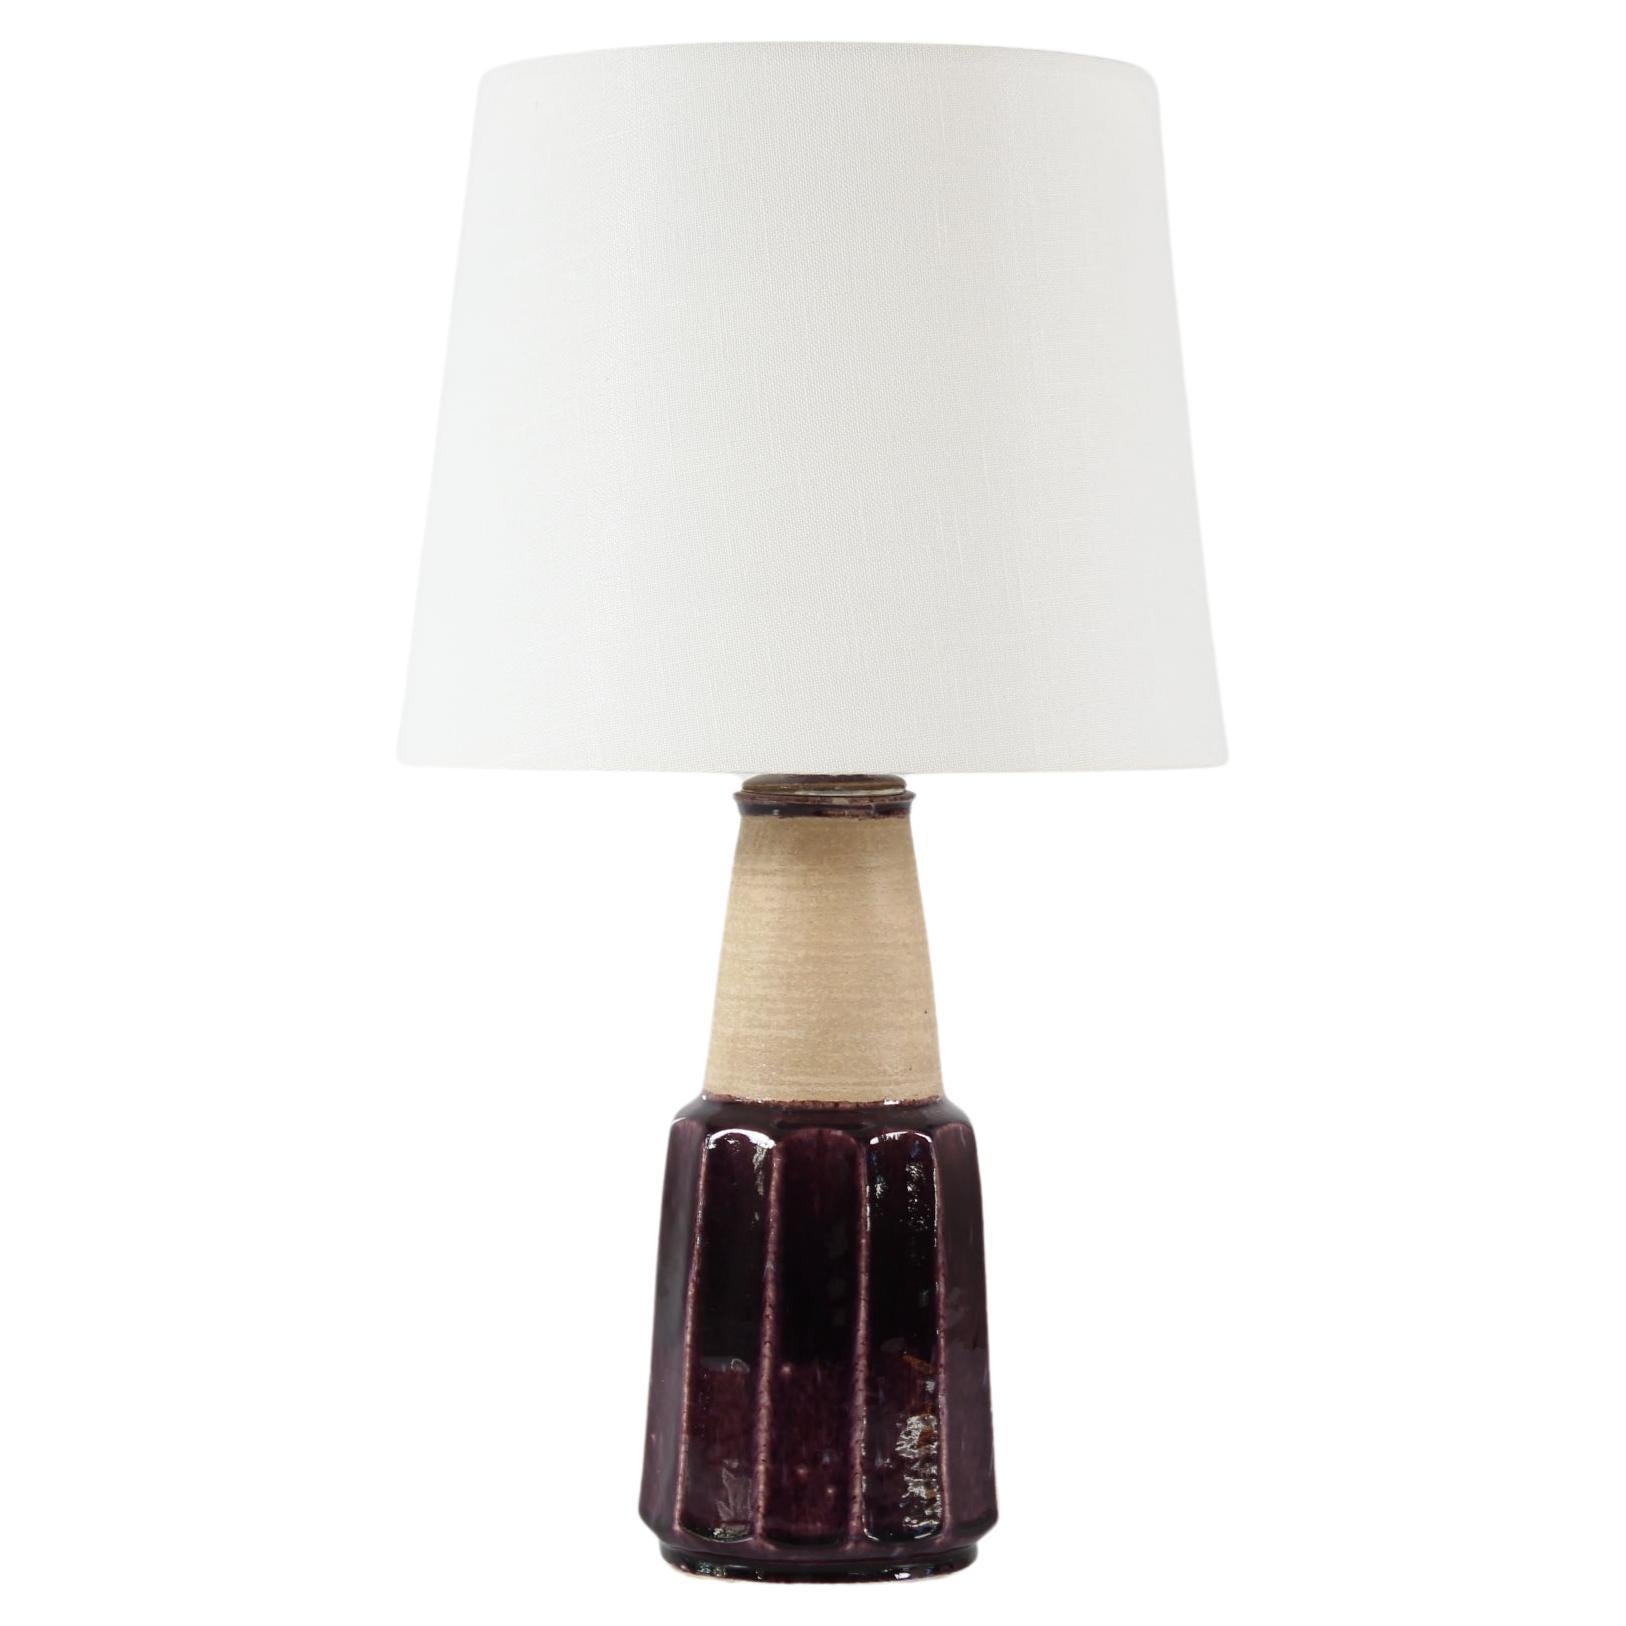 Herman A. Kähler Table Lamp with Dark Purple Glaze and New Shade Denmark 1960s For Sale